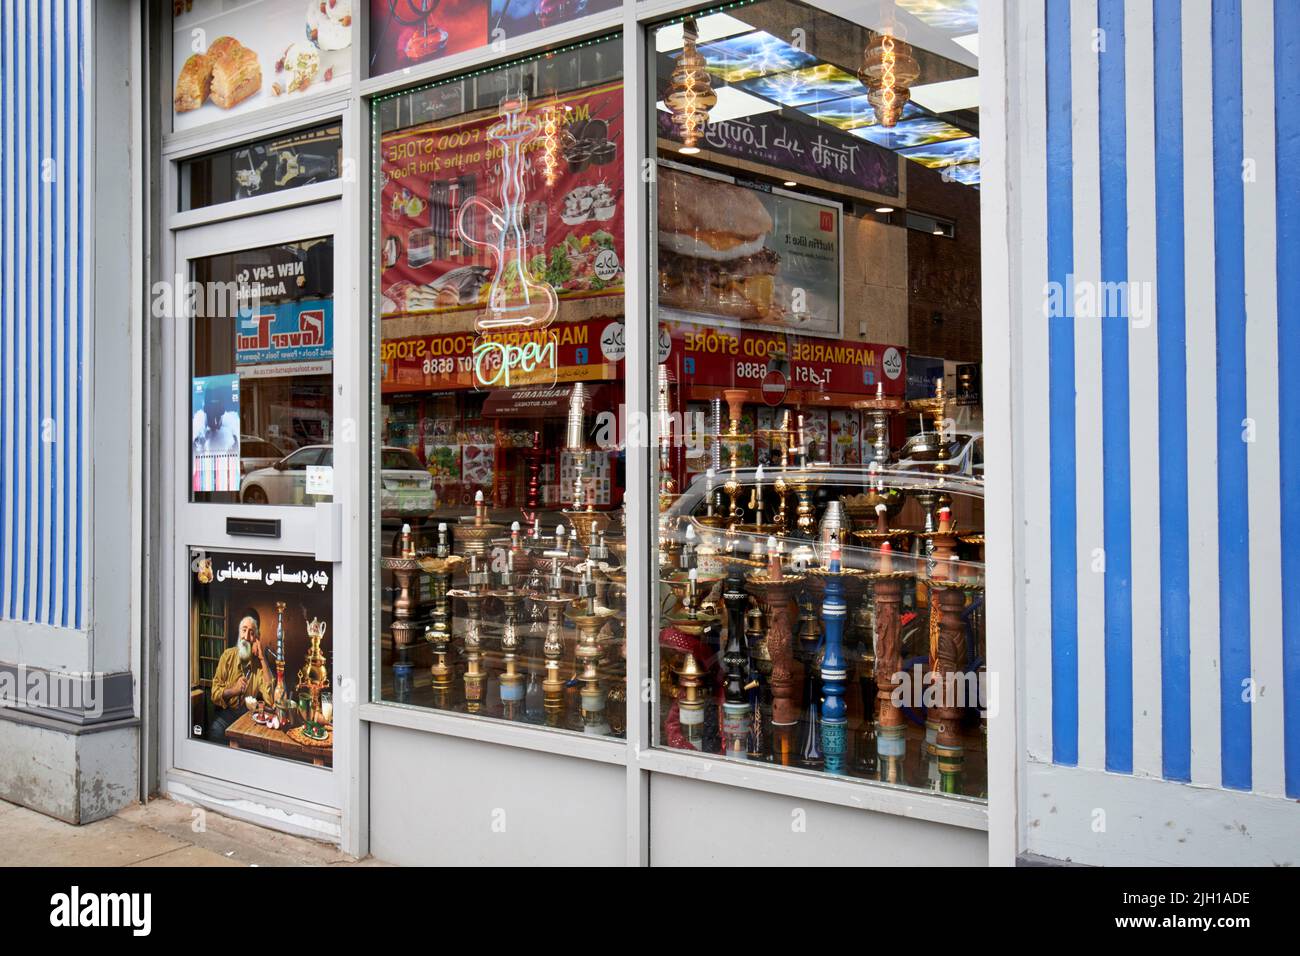 Immigrant shisha pipe fumatore negozio london Road Liverpool Inghilterra UK Foto Stock